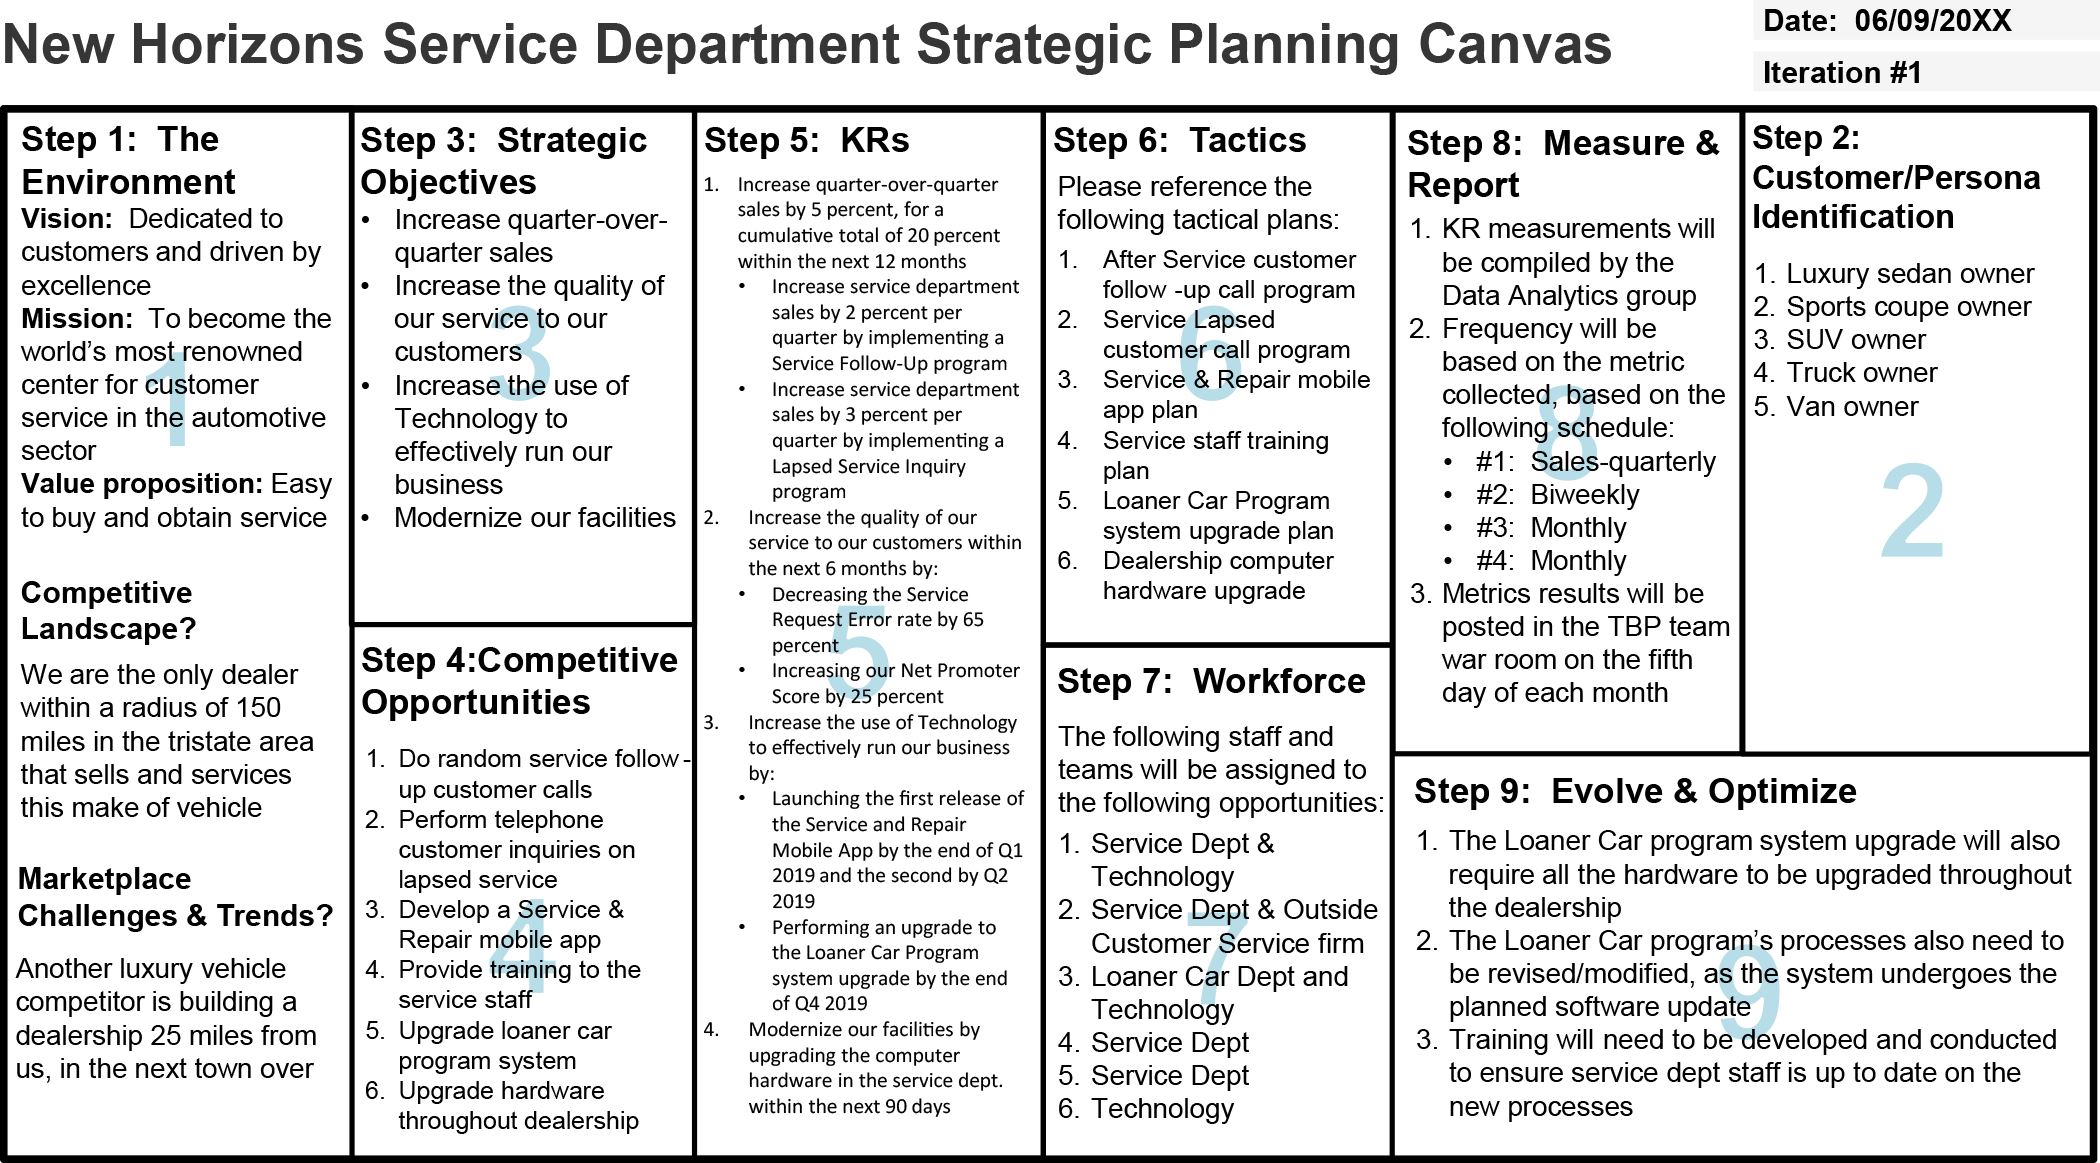 New Horizons service department strategic planning canvas